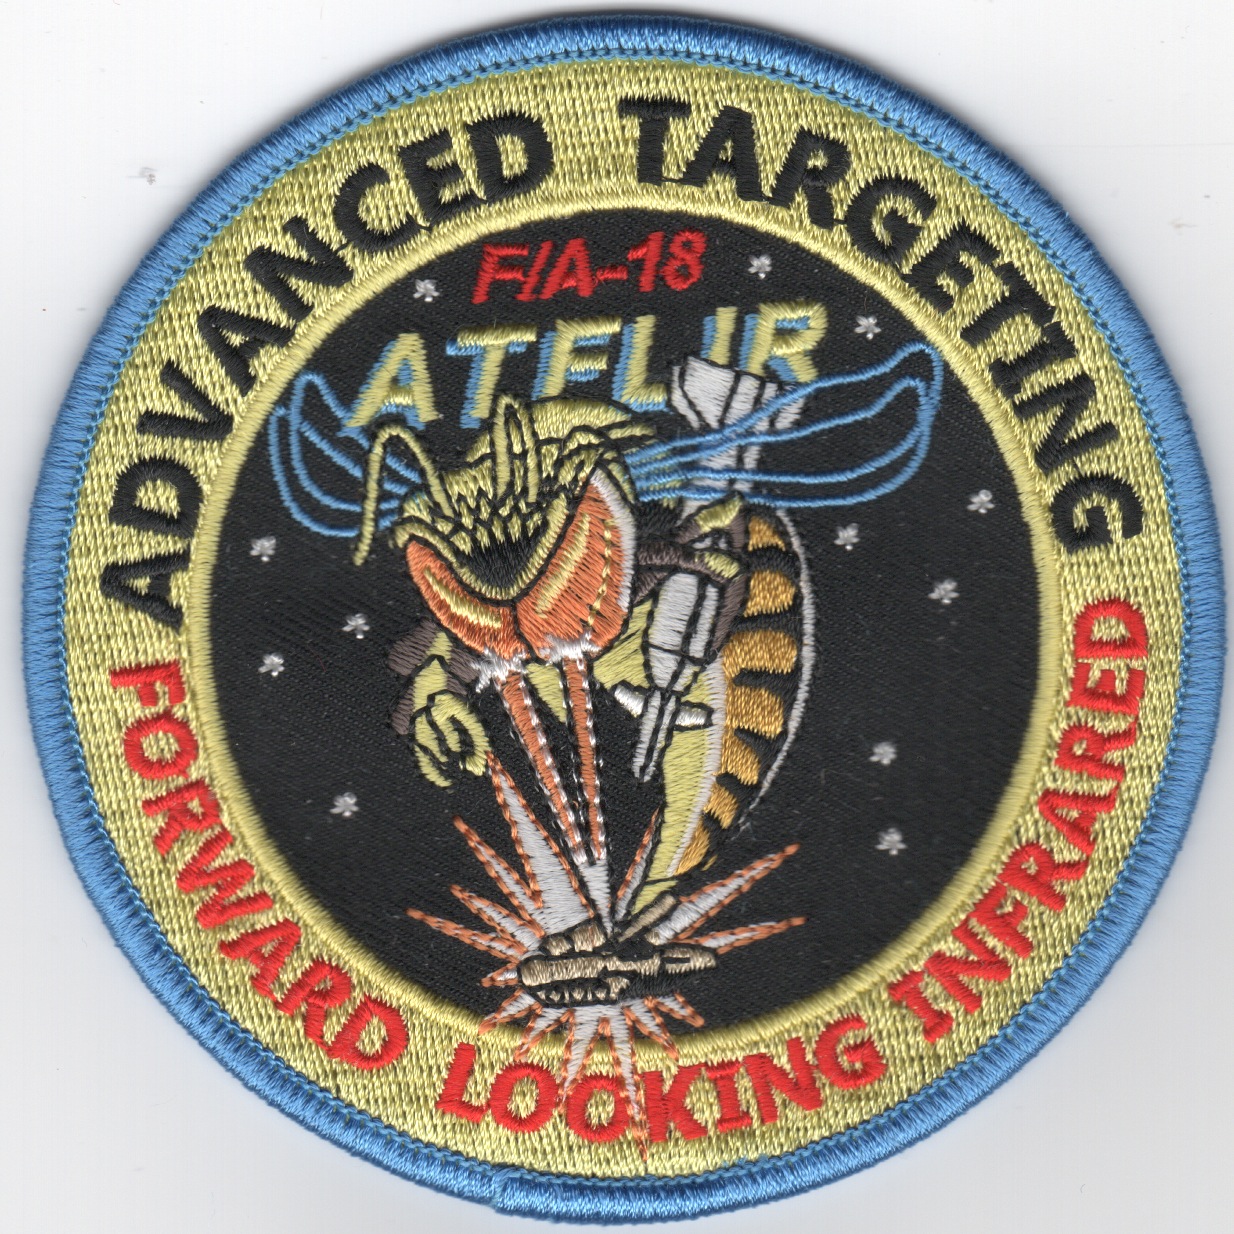 F/A-18 ATFLIR Patch